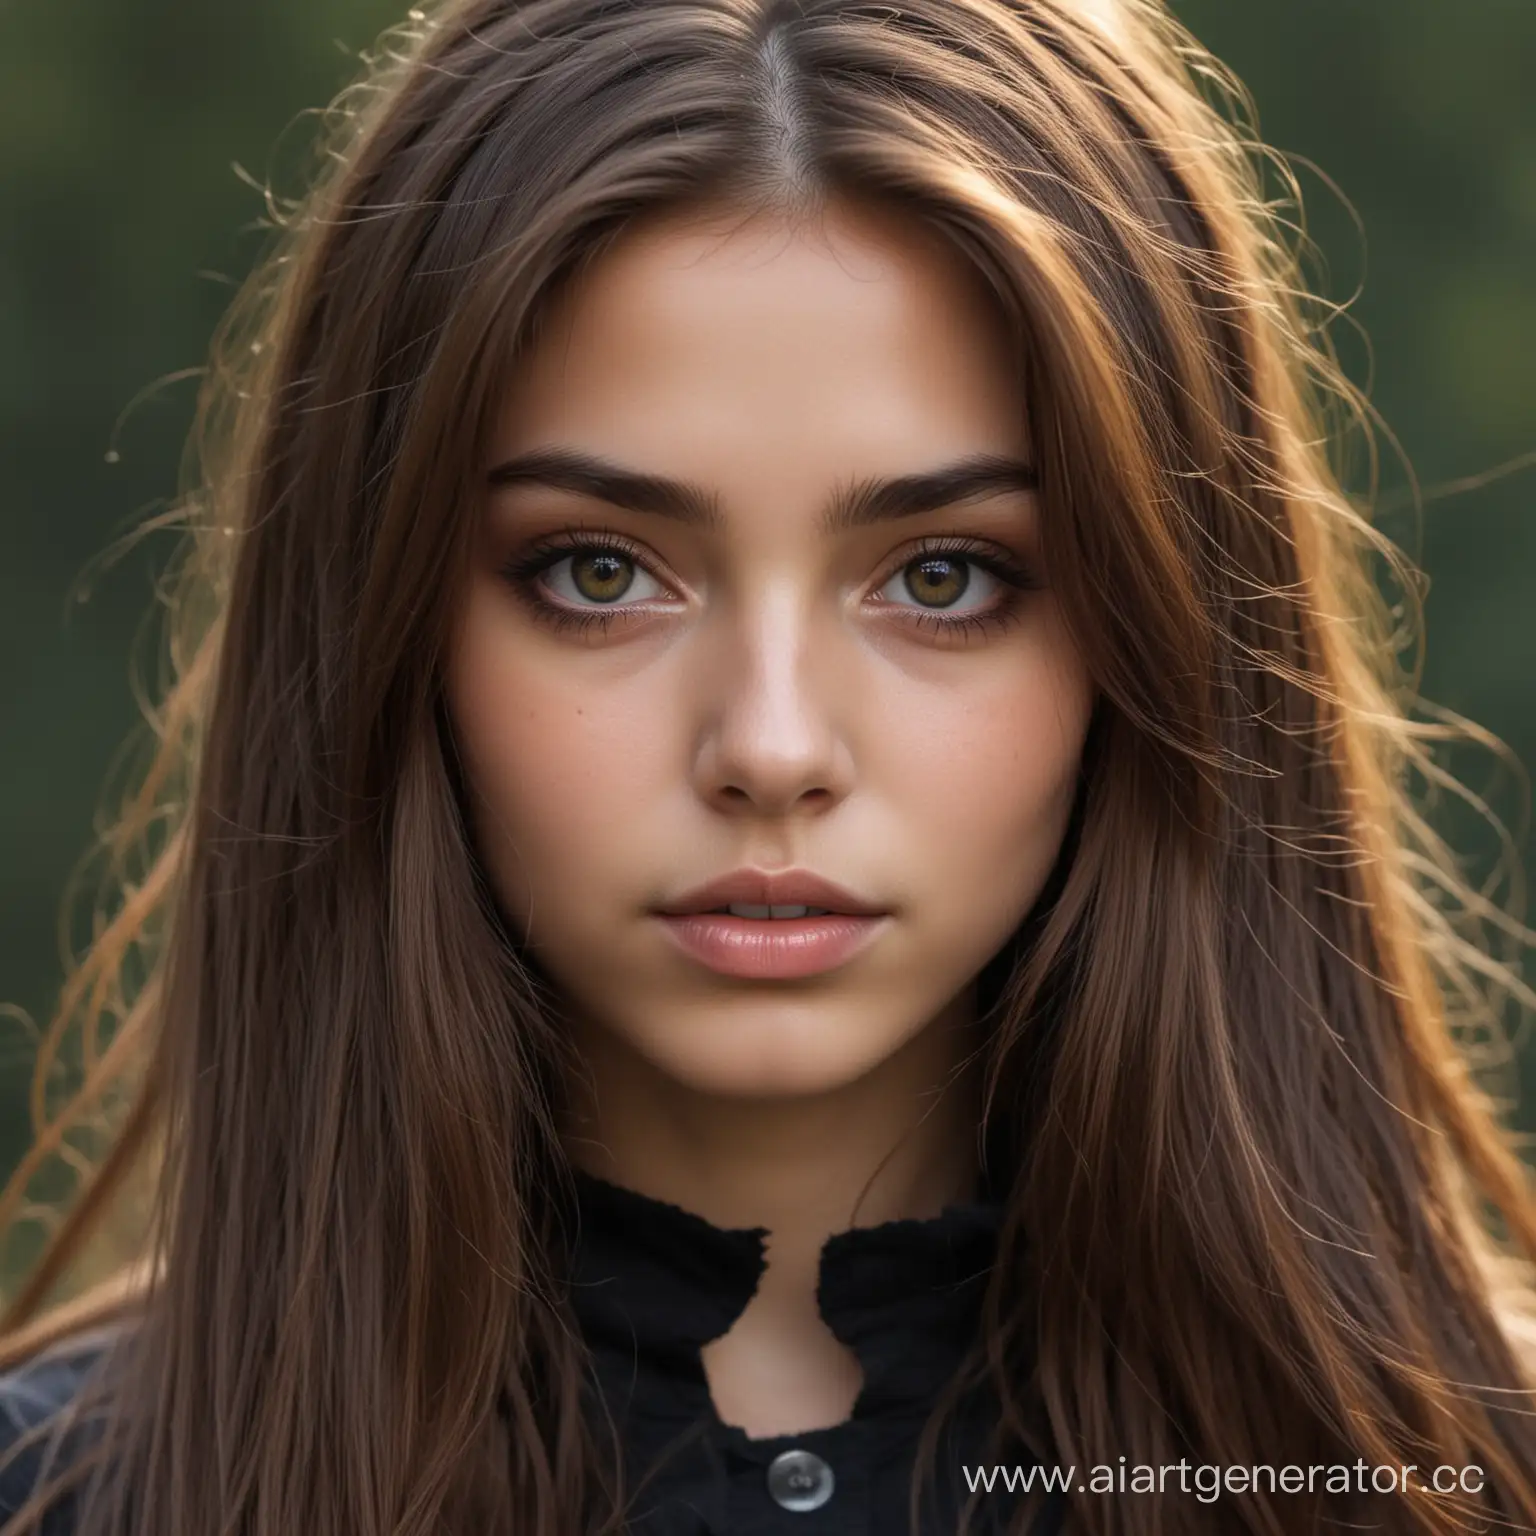 Captivating-Girl-with-CoalBlack-Eyes-and-Chestnut-Hair